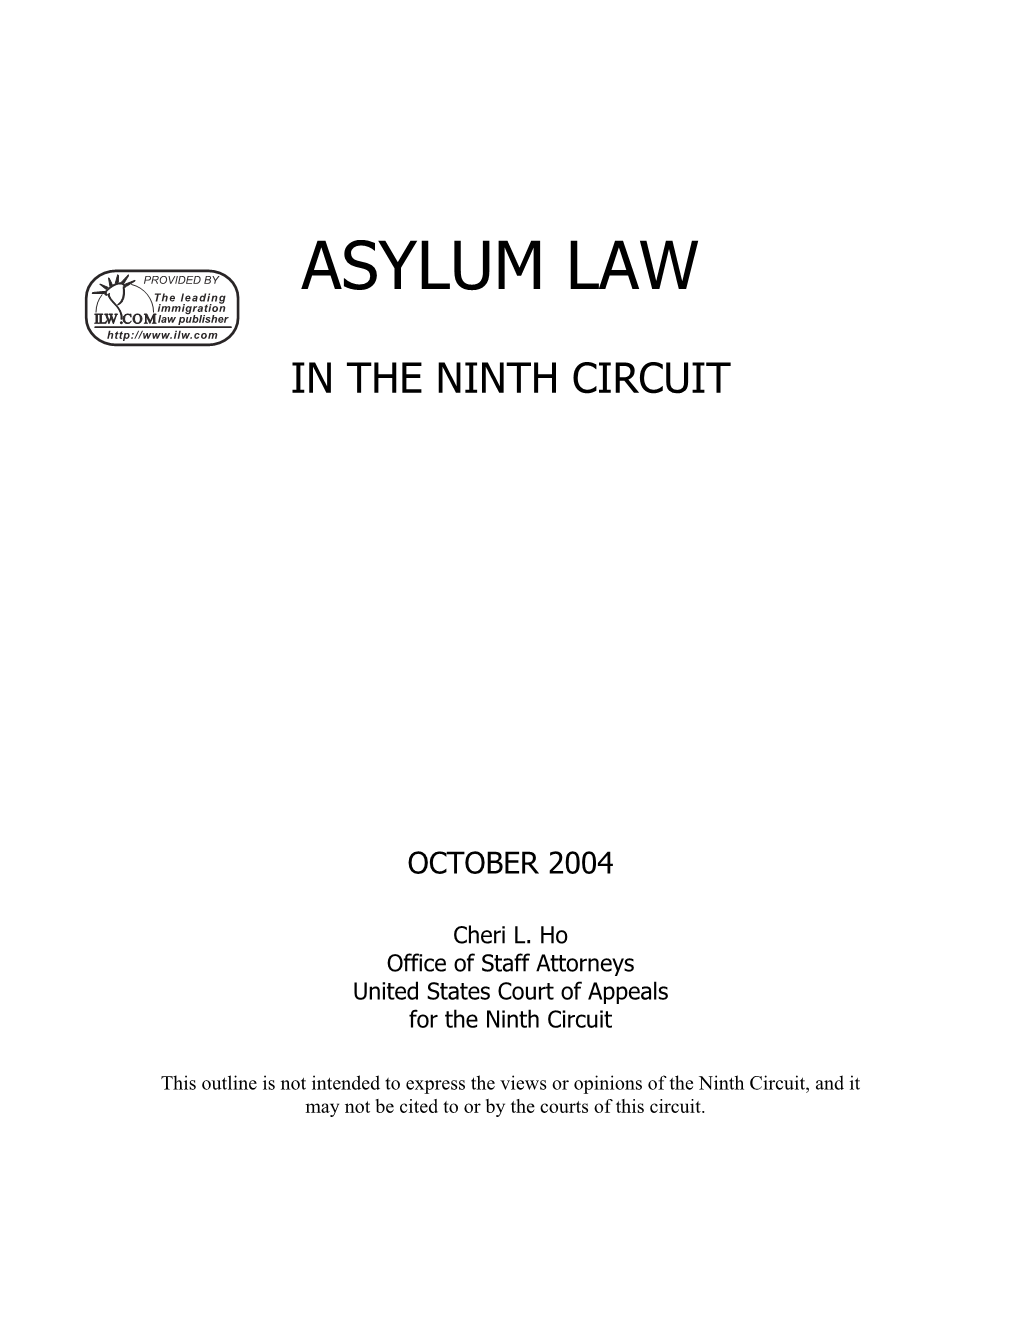 Asylum Law in the Ninth Circuit